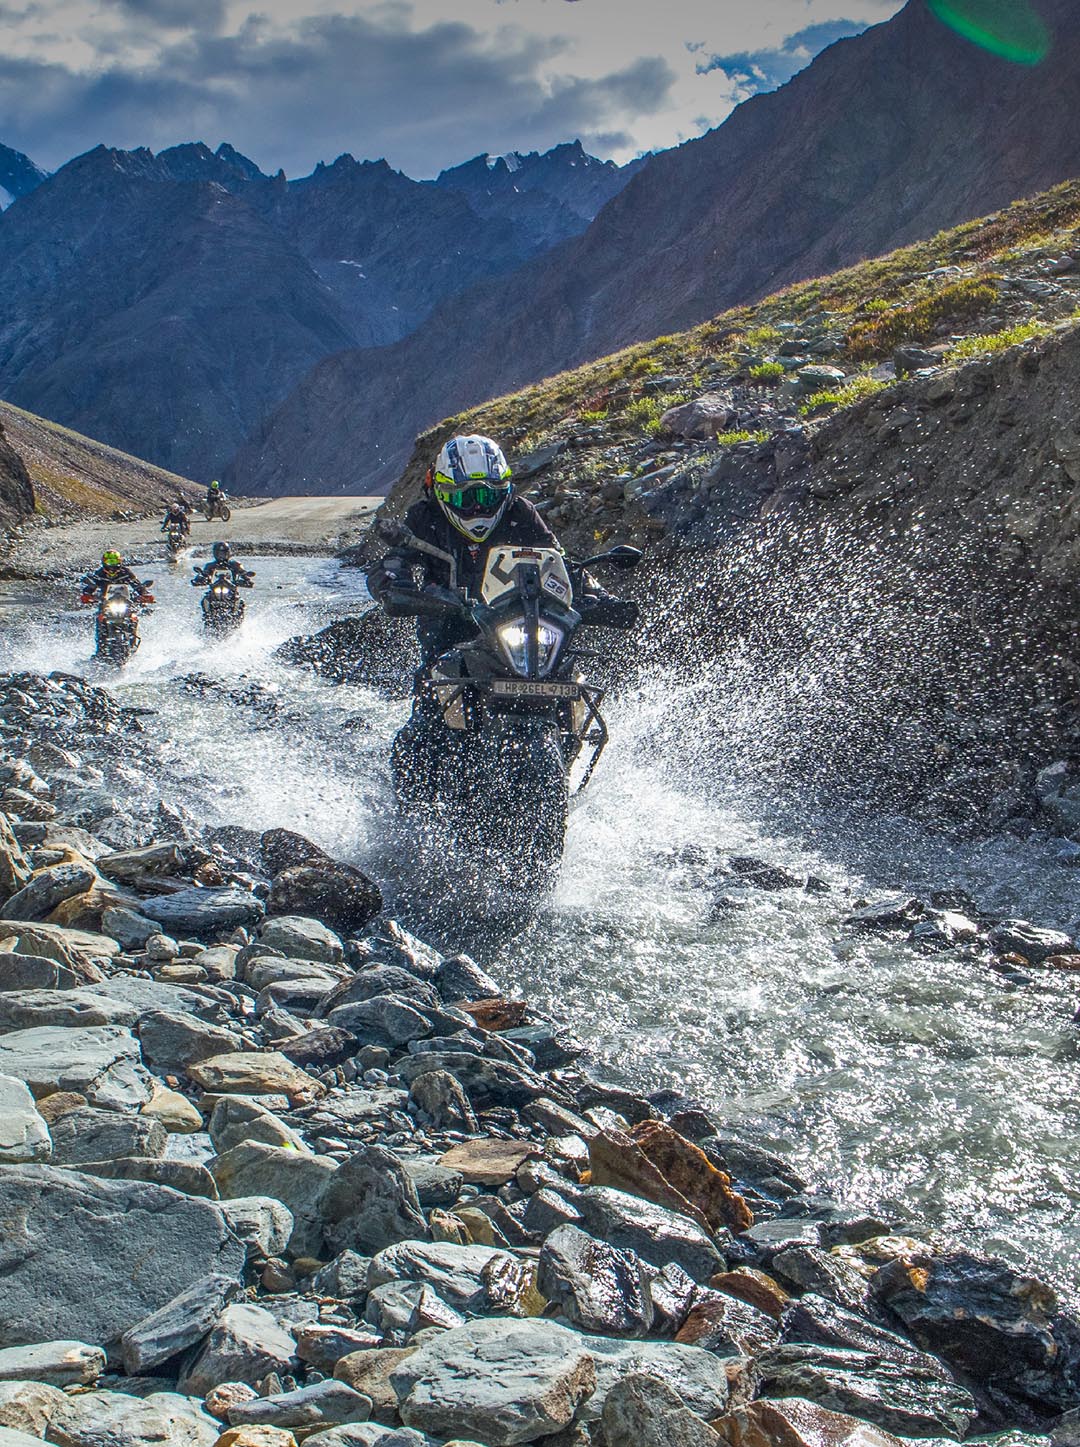 Ladakh adventure trip on KTM